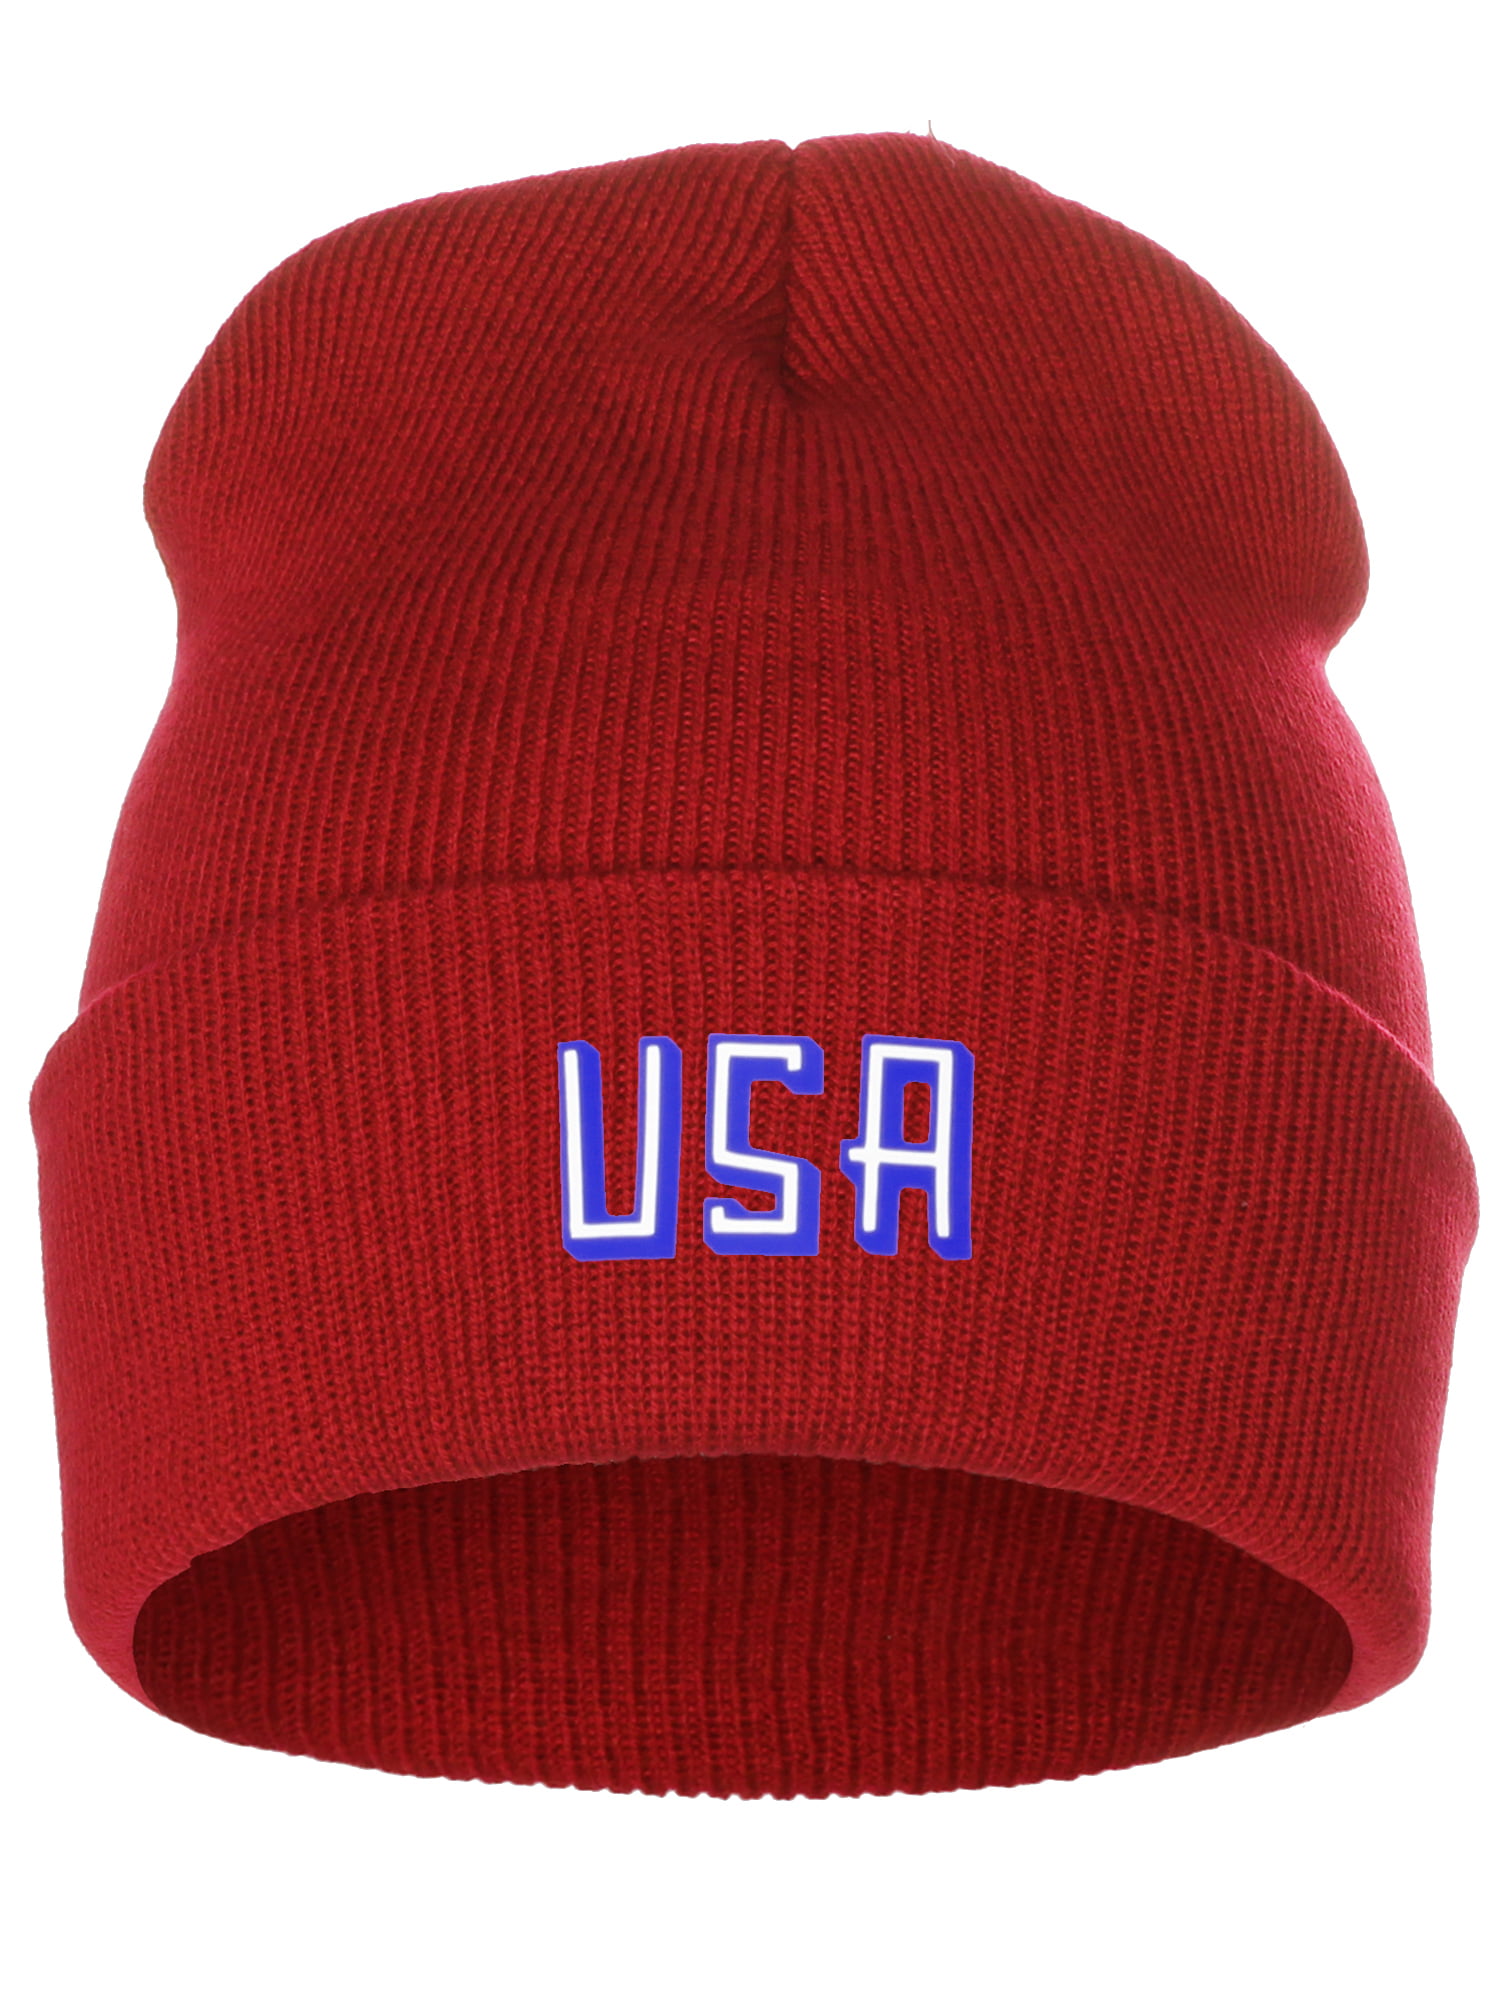 Details about   New York Beanie Warm Comfortable Unisex Knit Hat Men or Women Ski Cap w/Pom Pom 